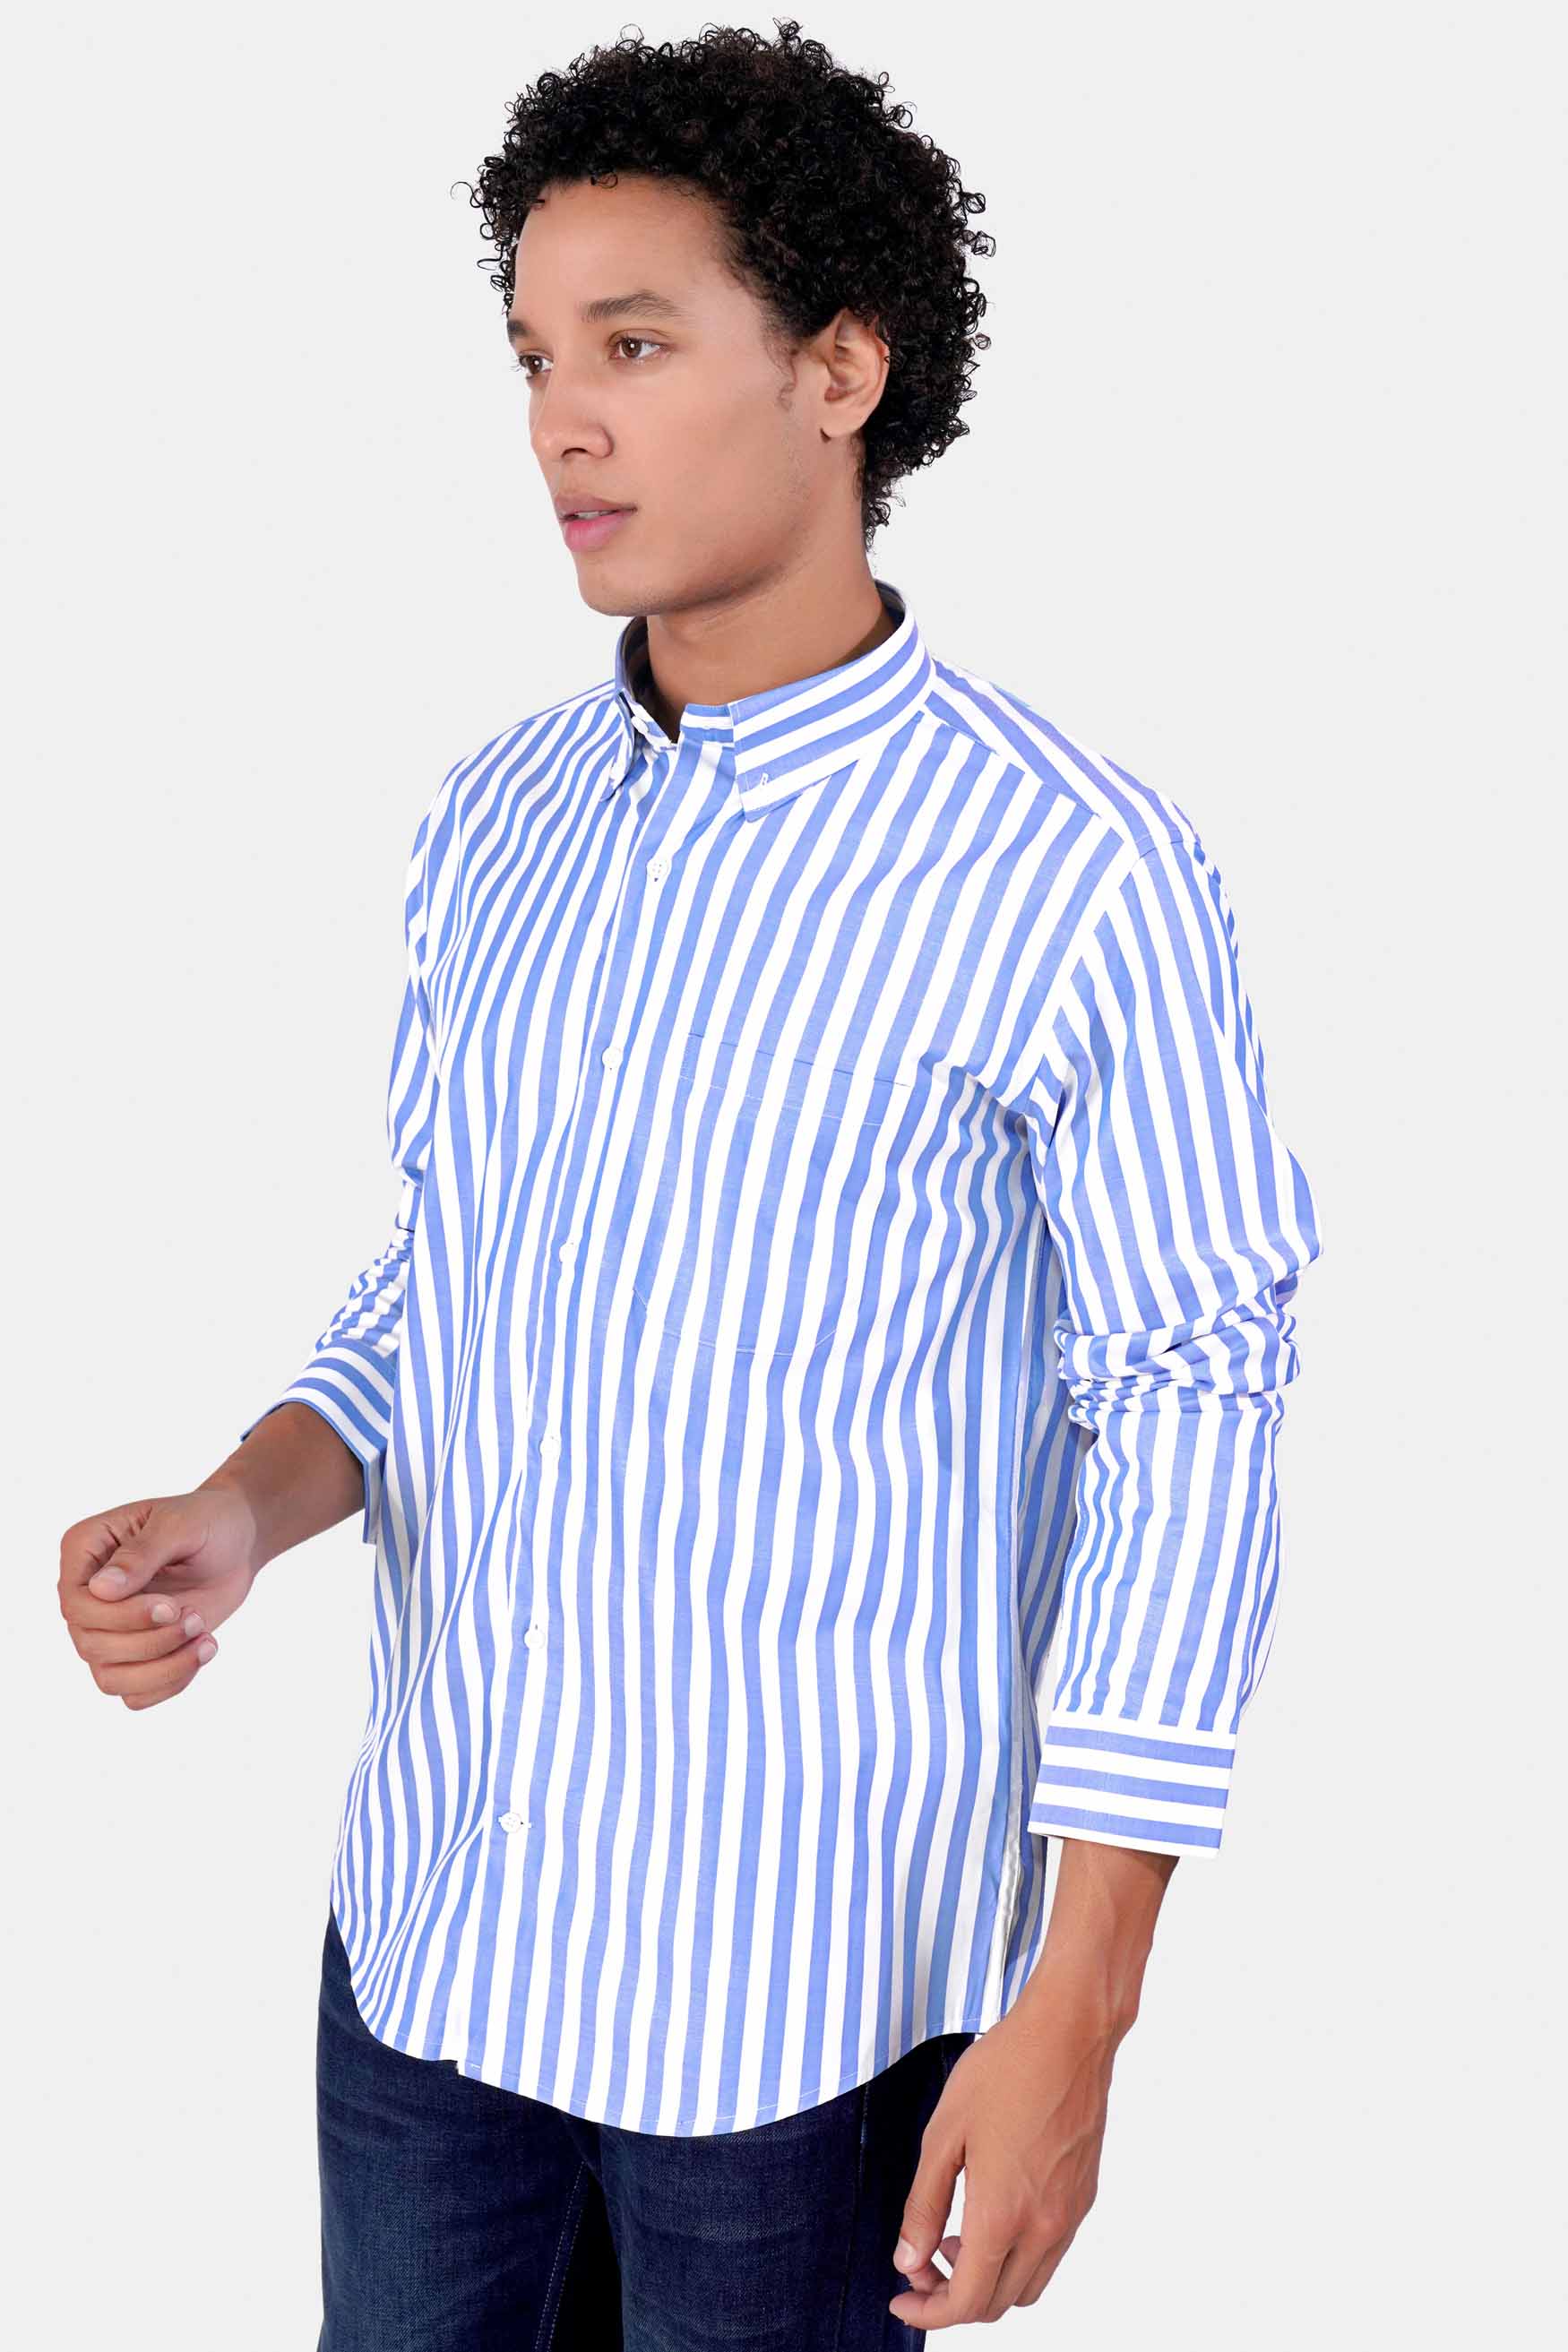 Bright White with Alaskan Blue Striped Twill Premium Cotton Shirt